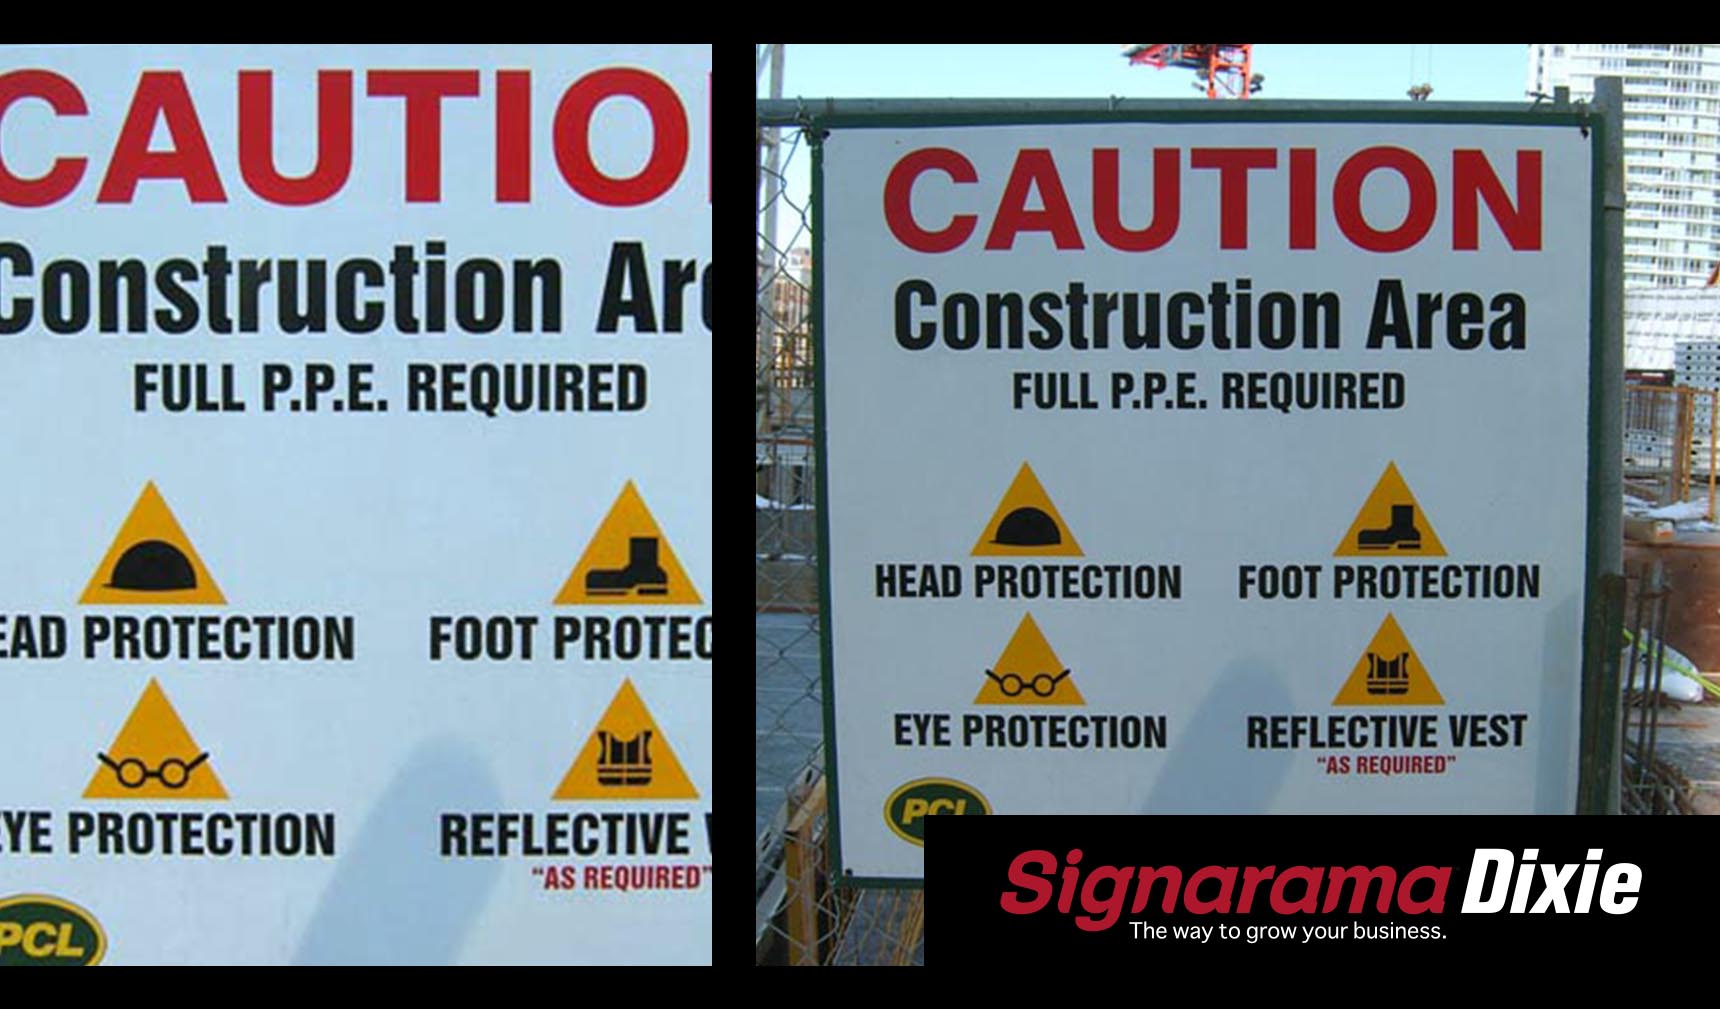 Caution Construction Area Sign